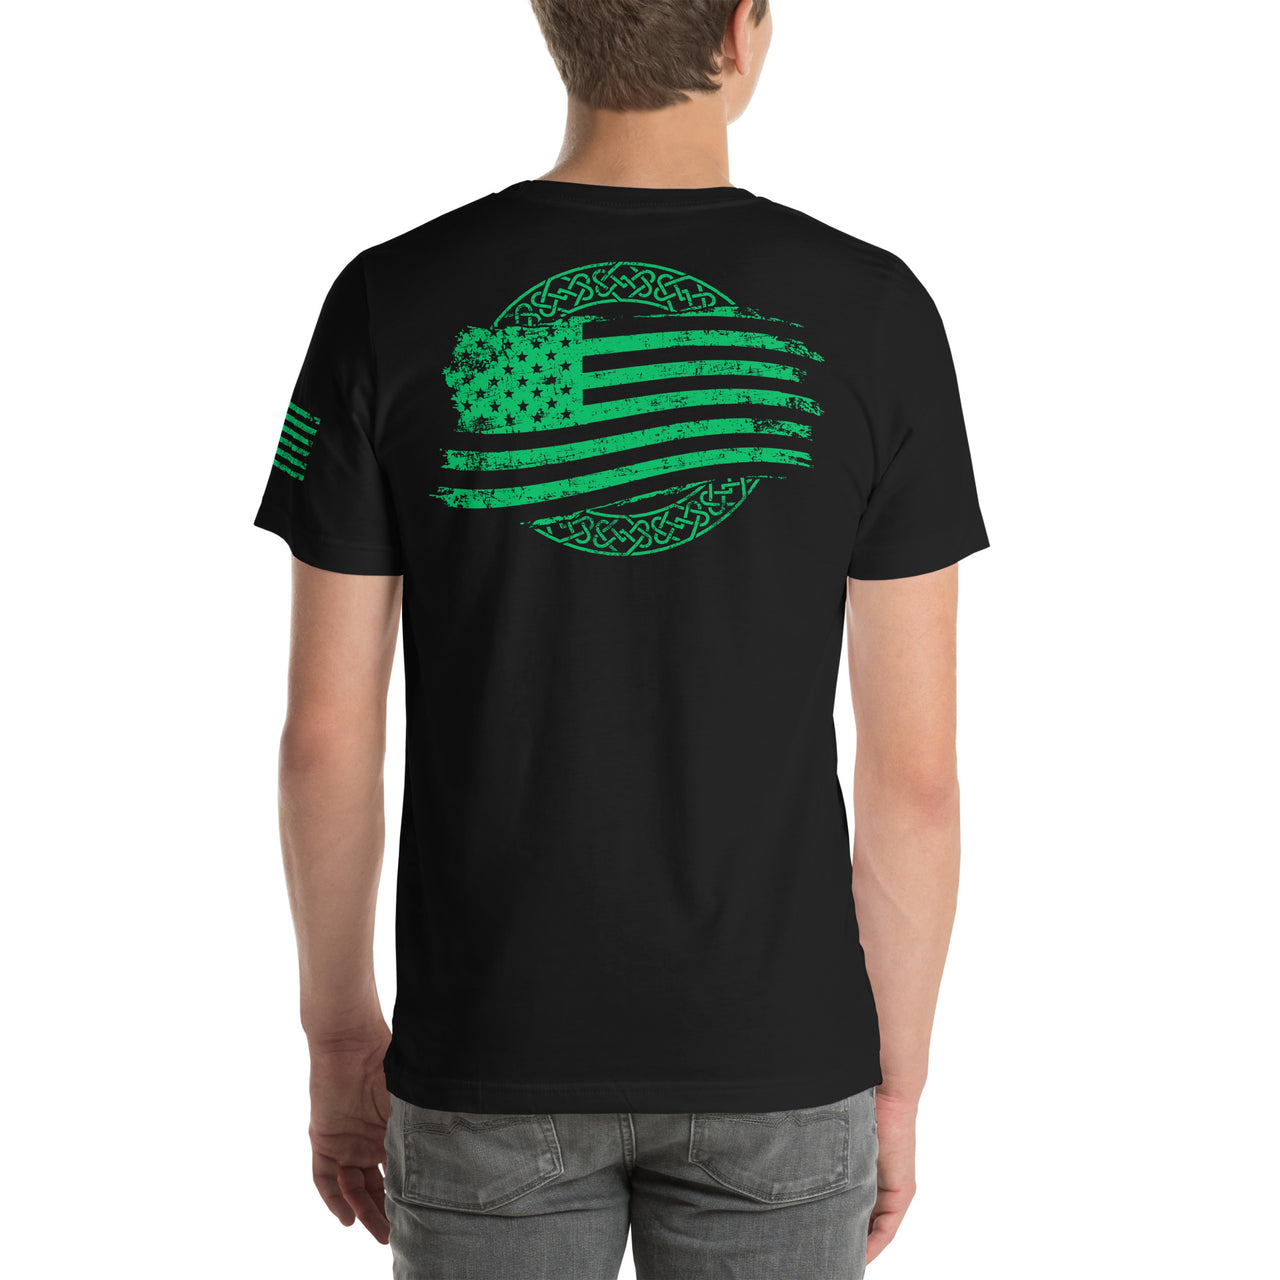 Irish American Flag T-Shirt modeled in black back view